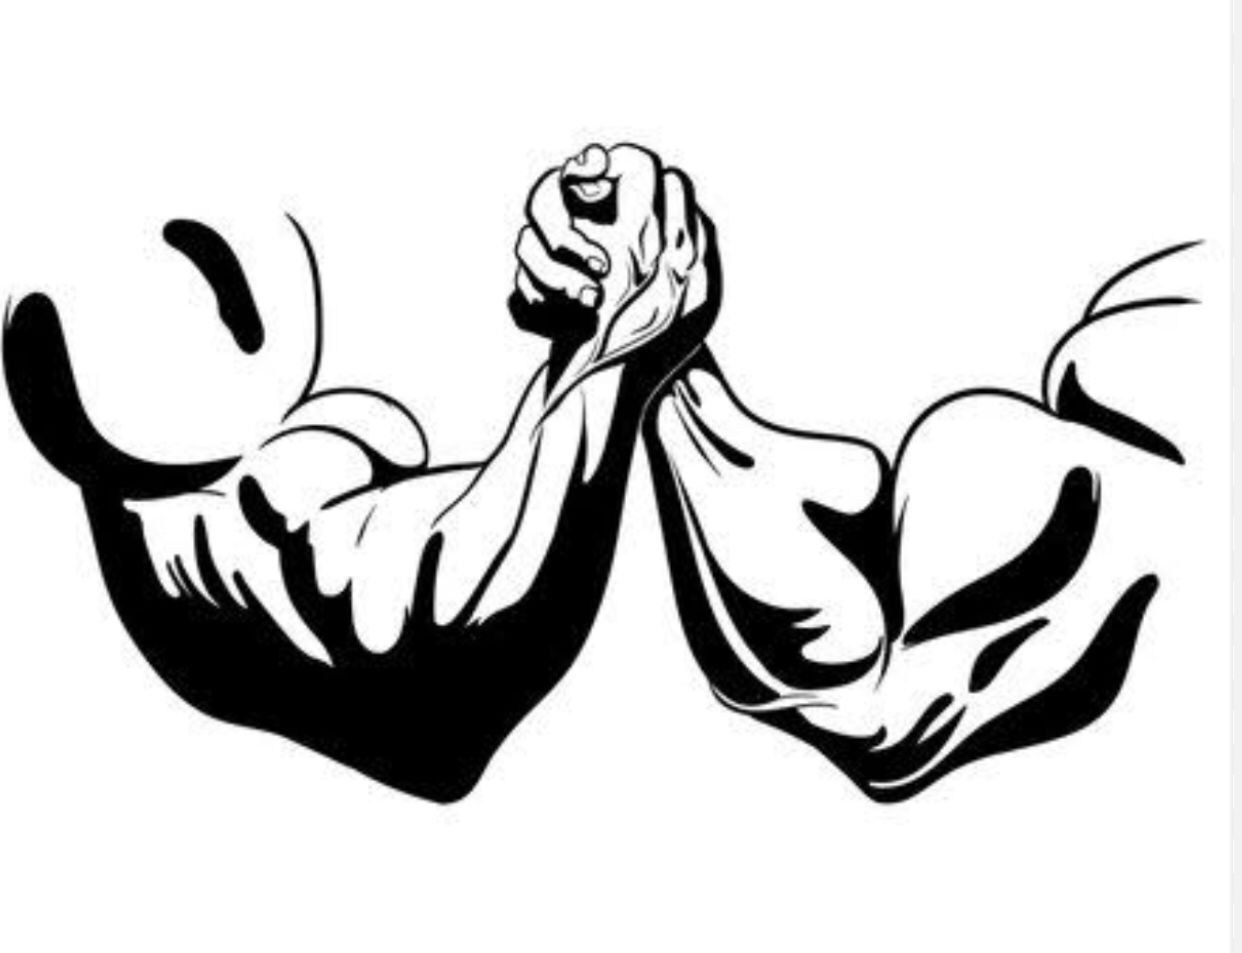 arm wrestling